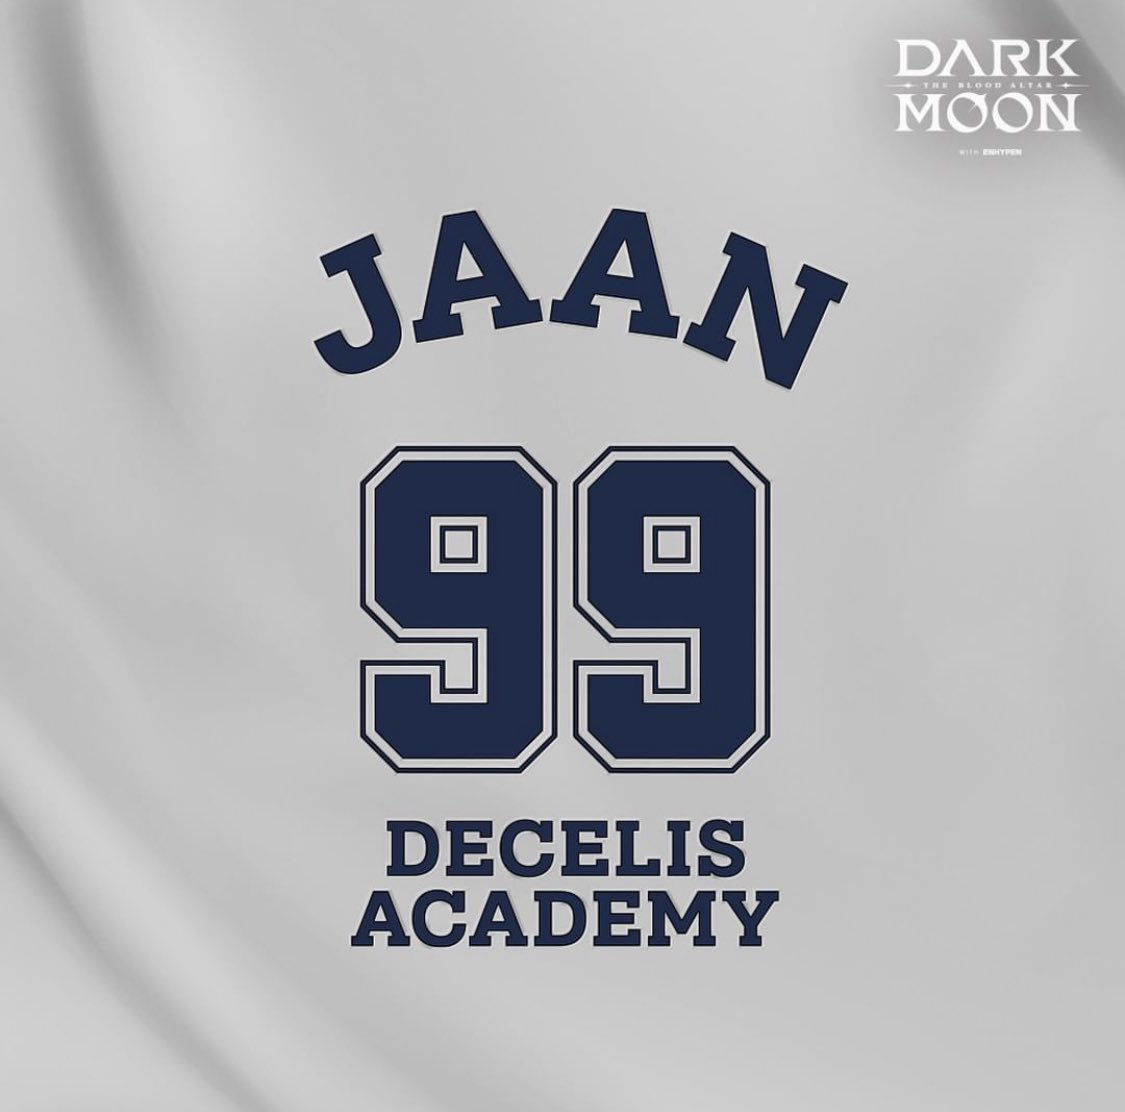 Decelis Academy Team  
Player No. 99
Name: JAAN 
Position: ENFORCER 
Stat: Breakthrough , Shot power 
Aggressiveness , Strength 

#JAY #ENHYPEN_JAY #제이
#DARKMOON_Jaan #WEBTOON_Jay